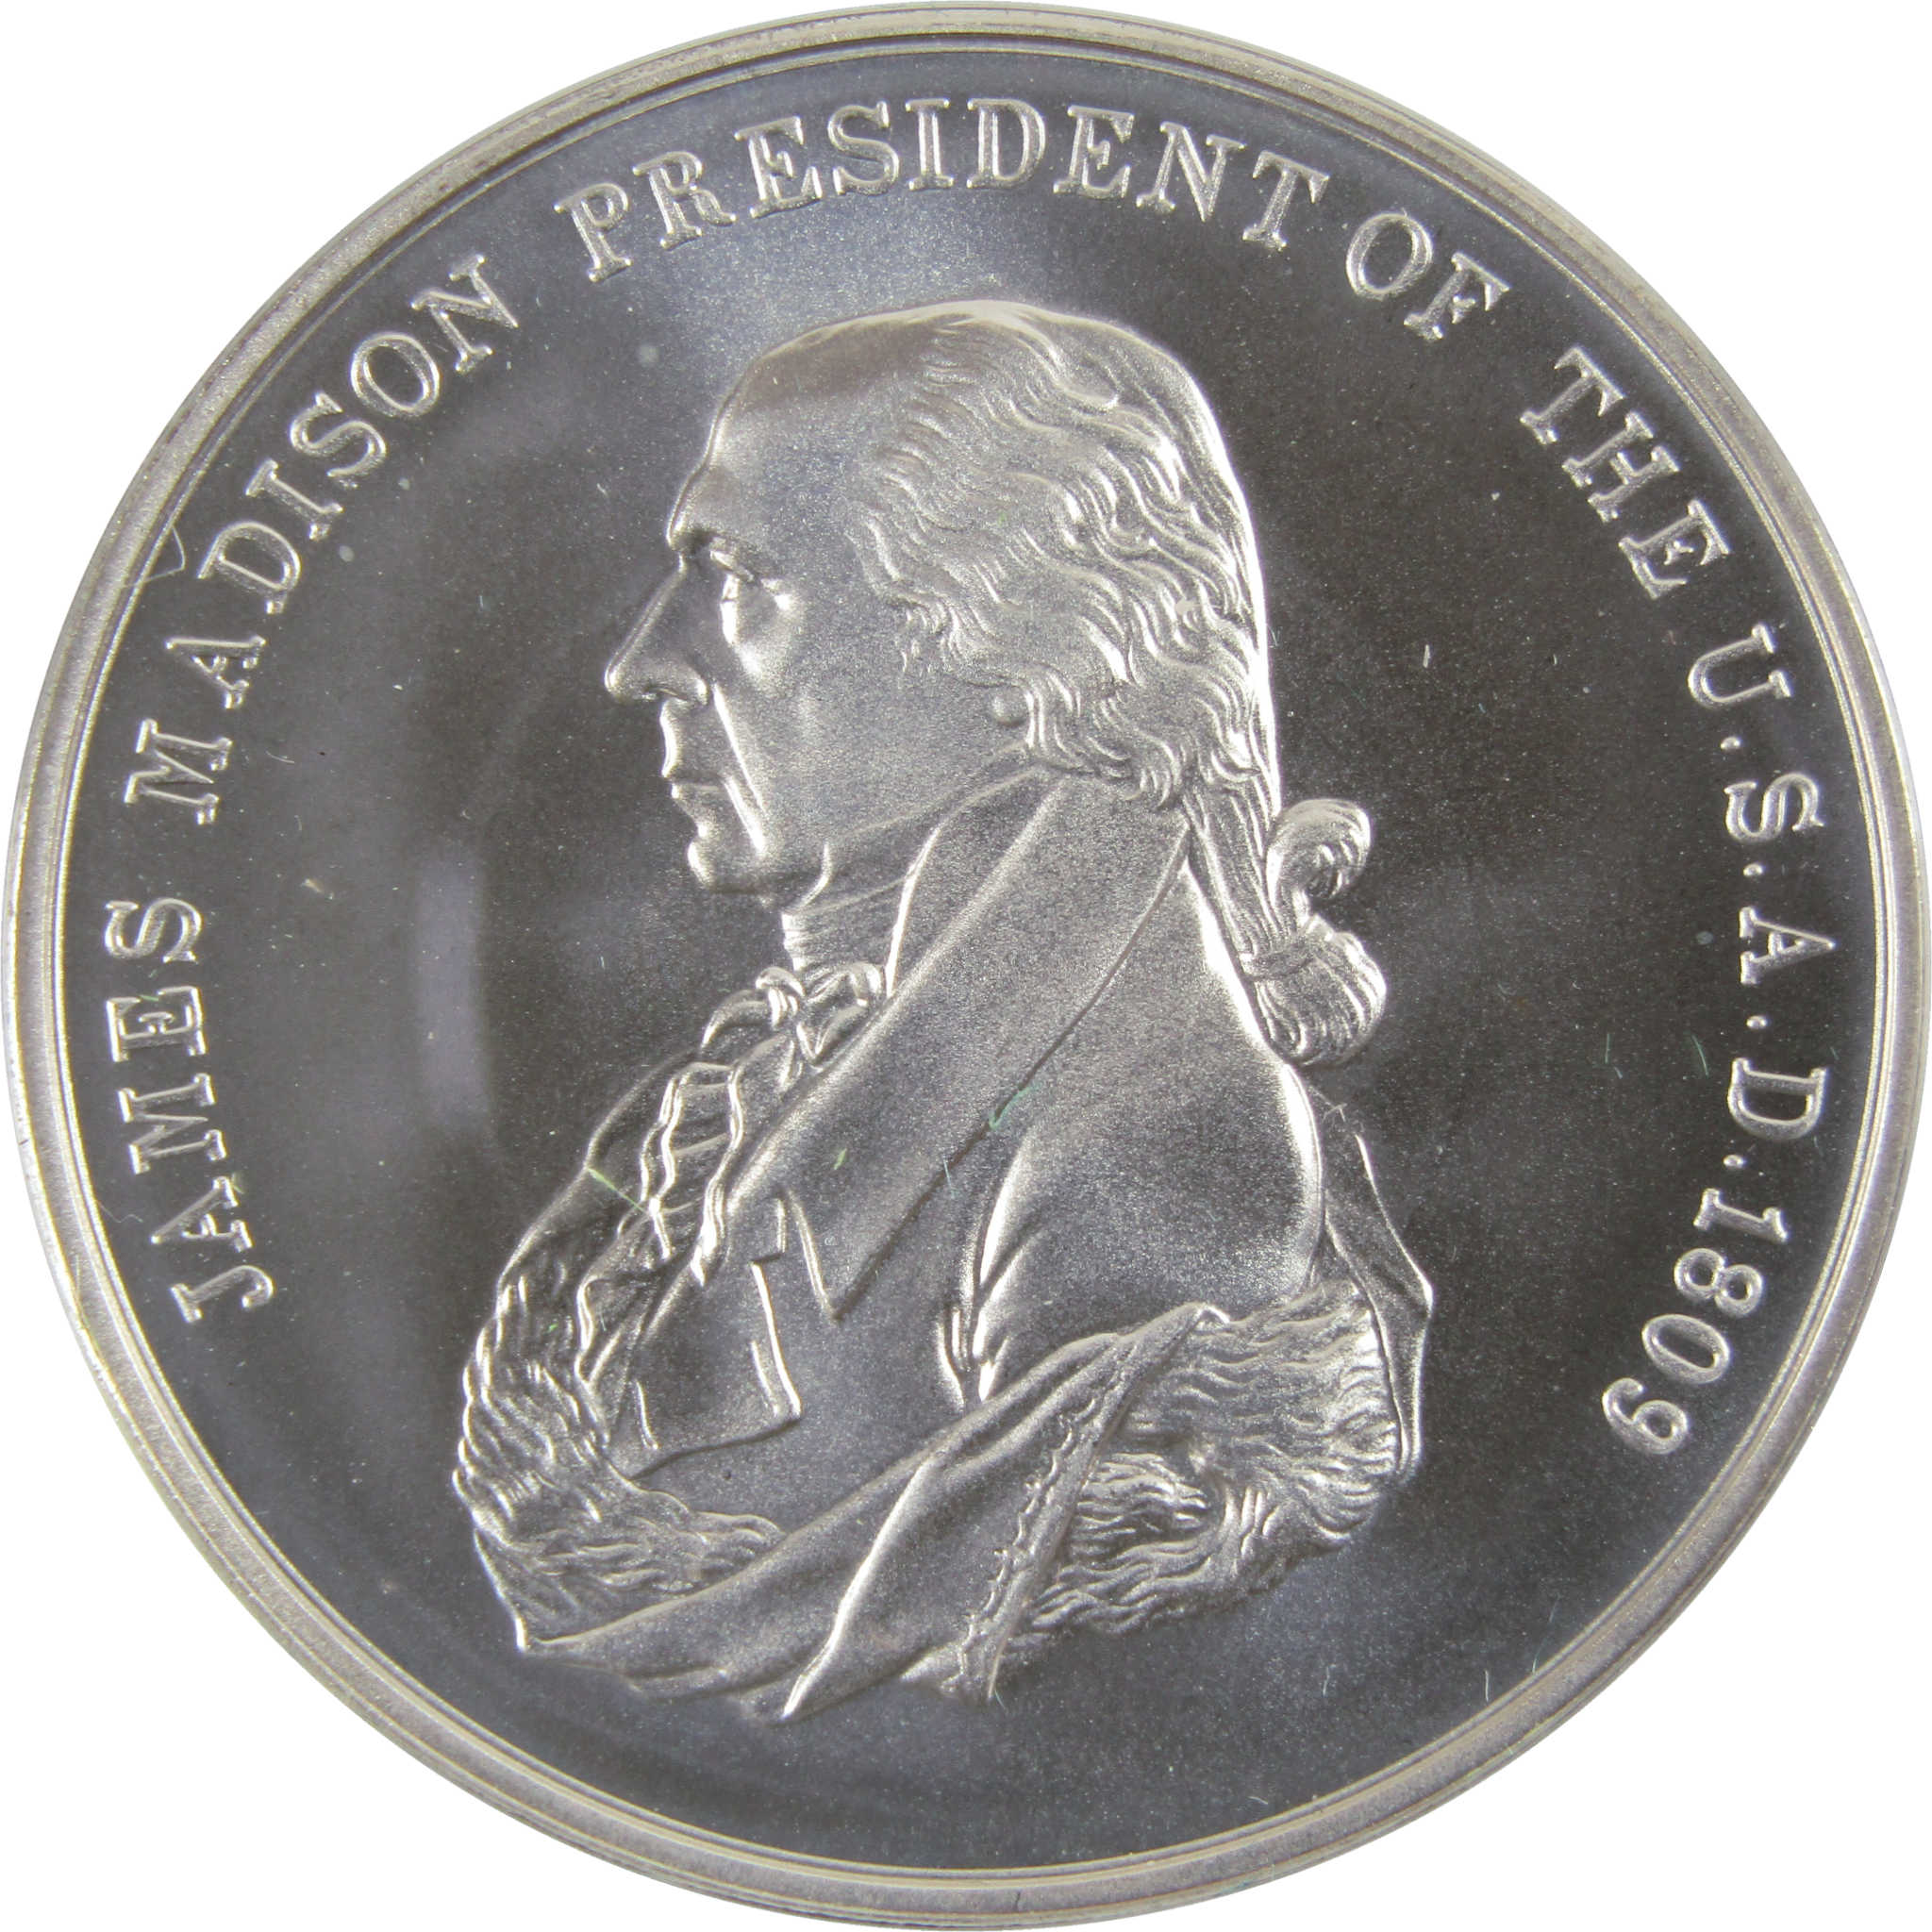 James Madison Presidential 1 oz Silver Medal Unc SKU:CPC3610